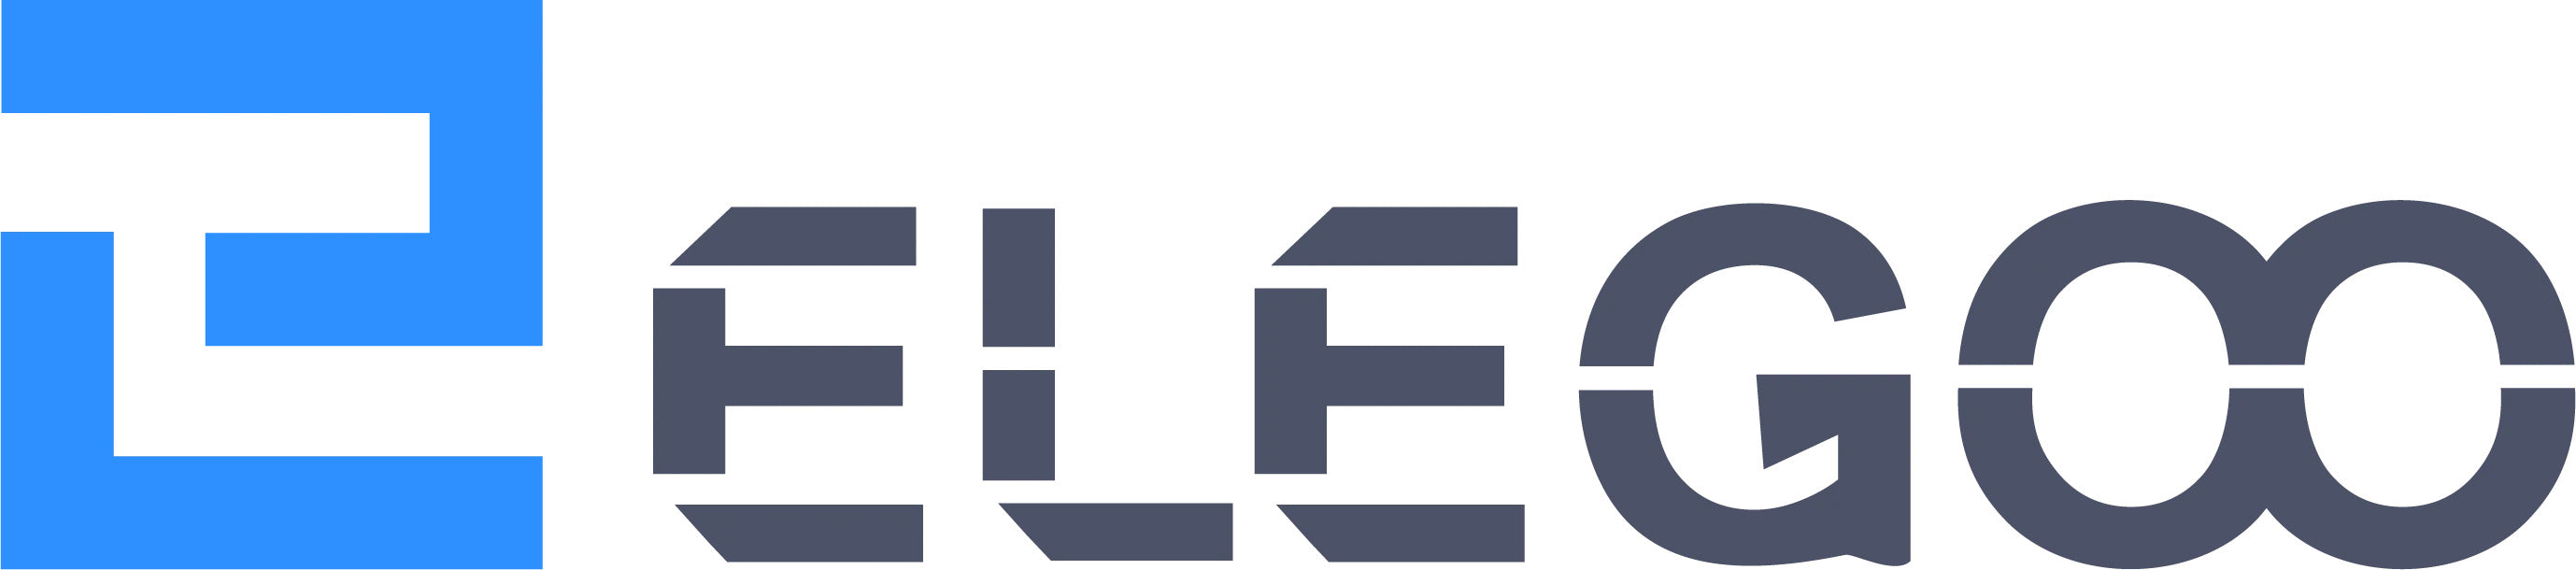 ELEGOO Brand Logo